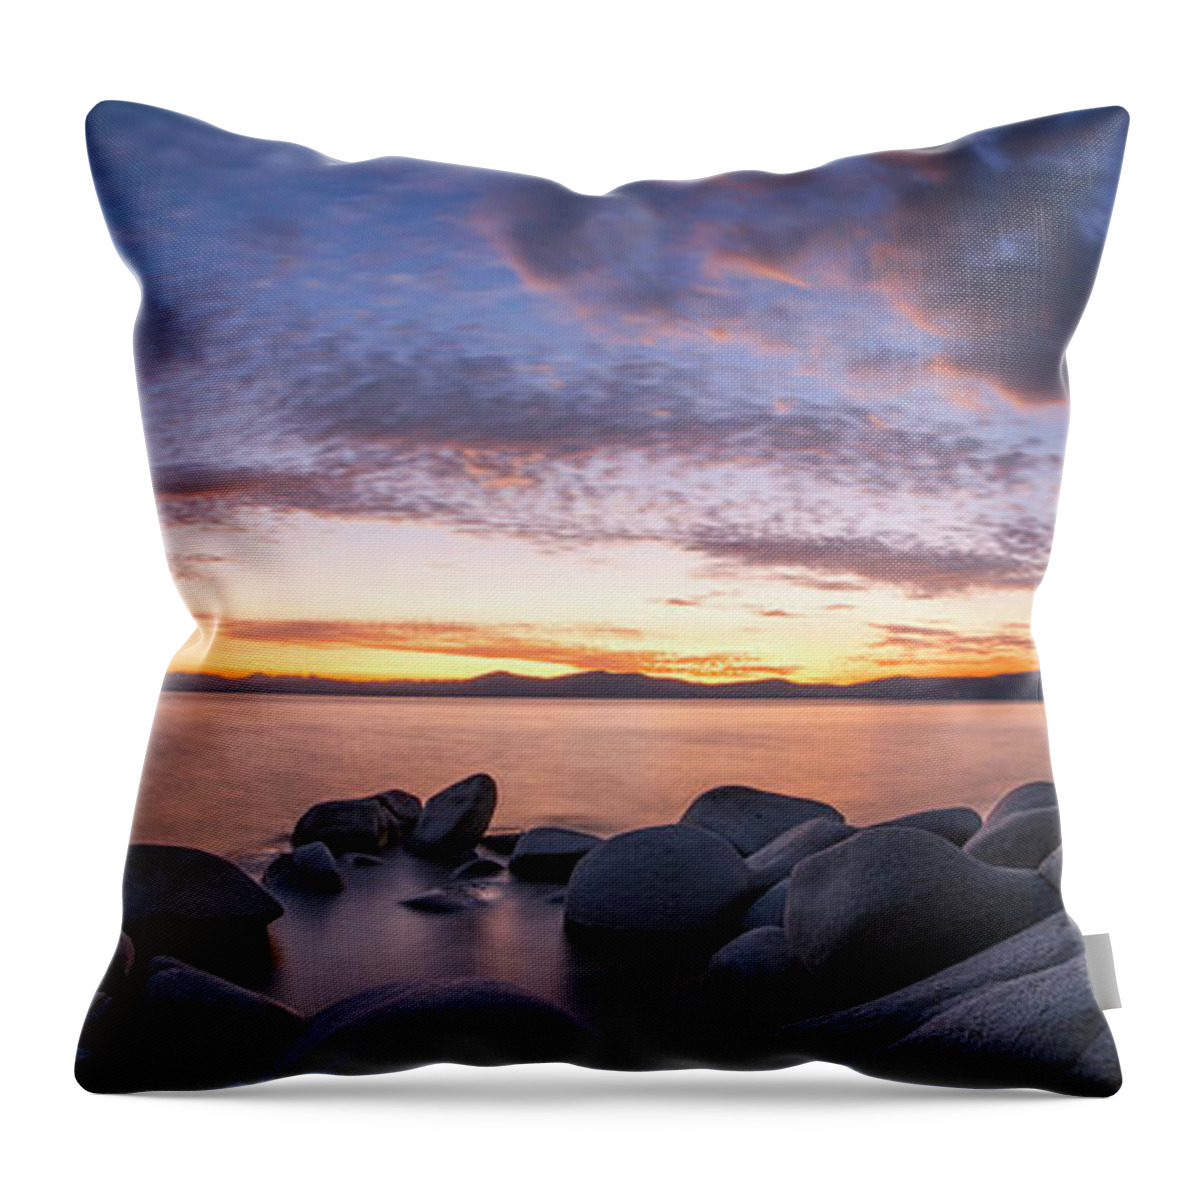 Brad Scott Throw Pillow featuring the photograph East Shore Cove Panorama by Brad Scott by Brad Scott